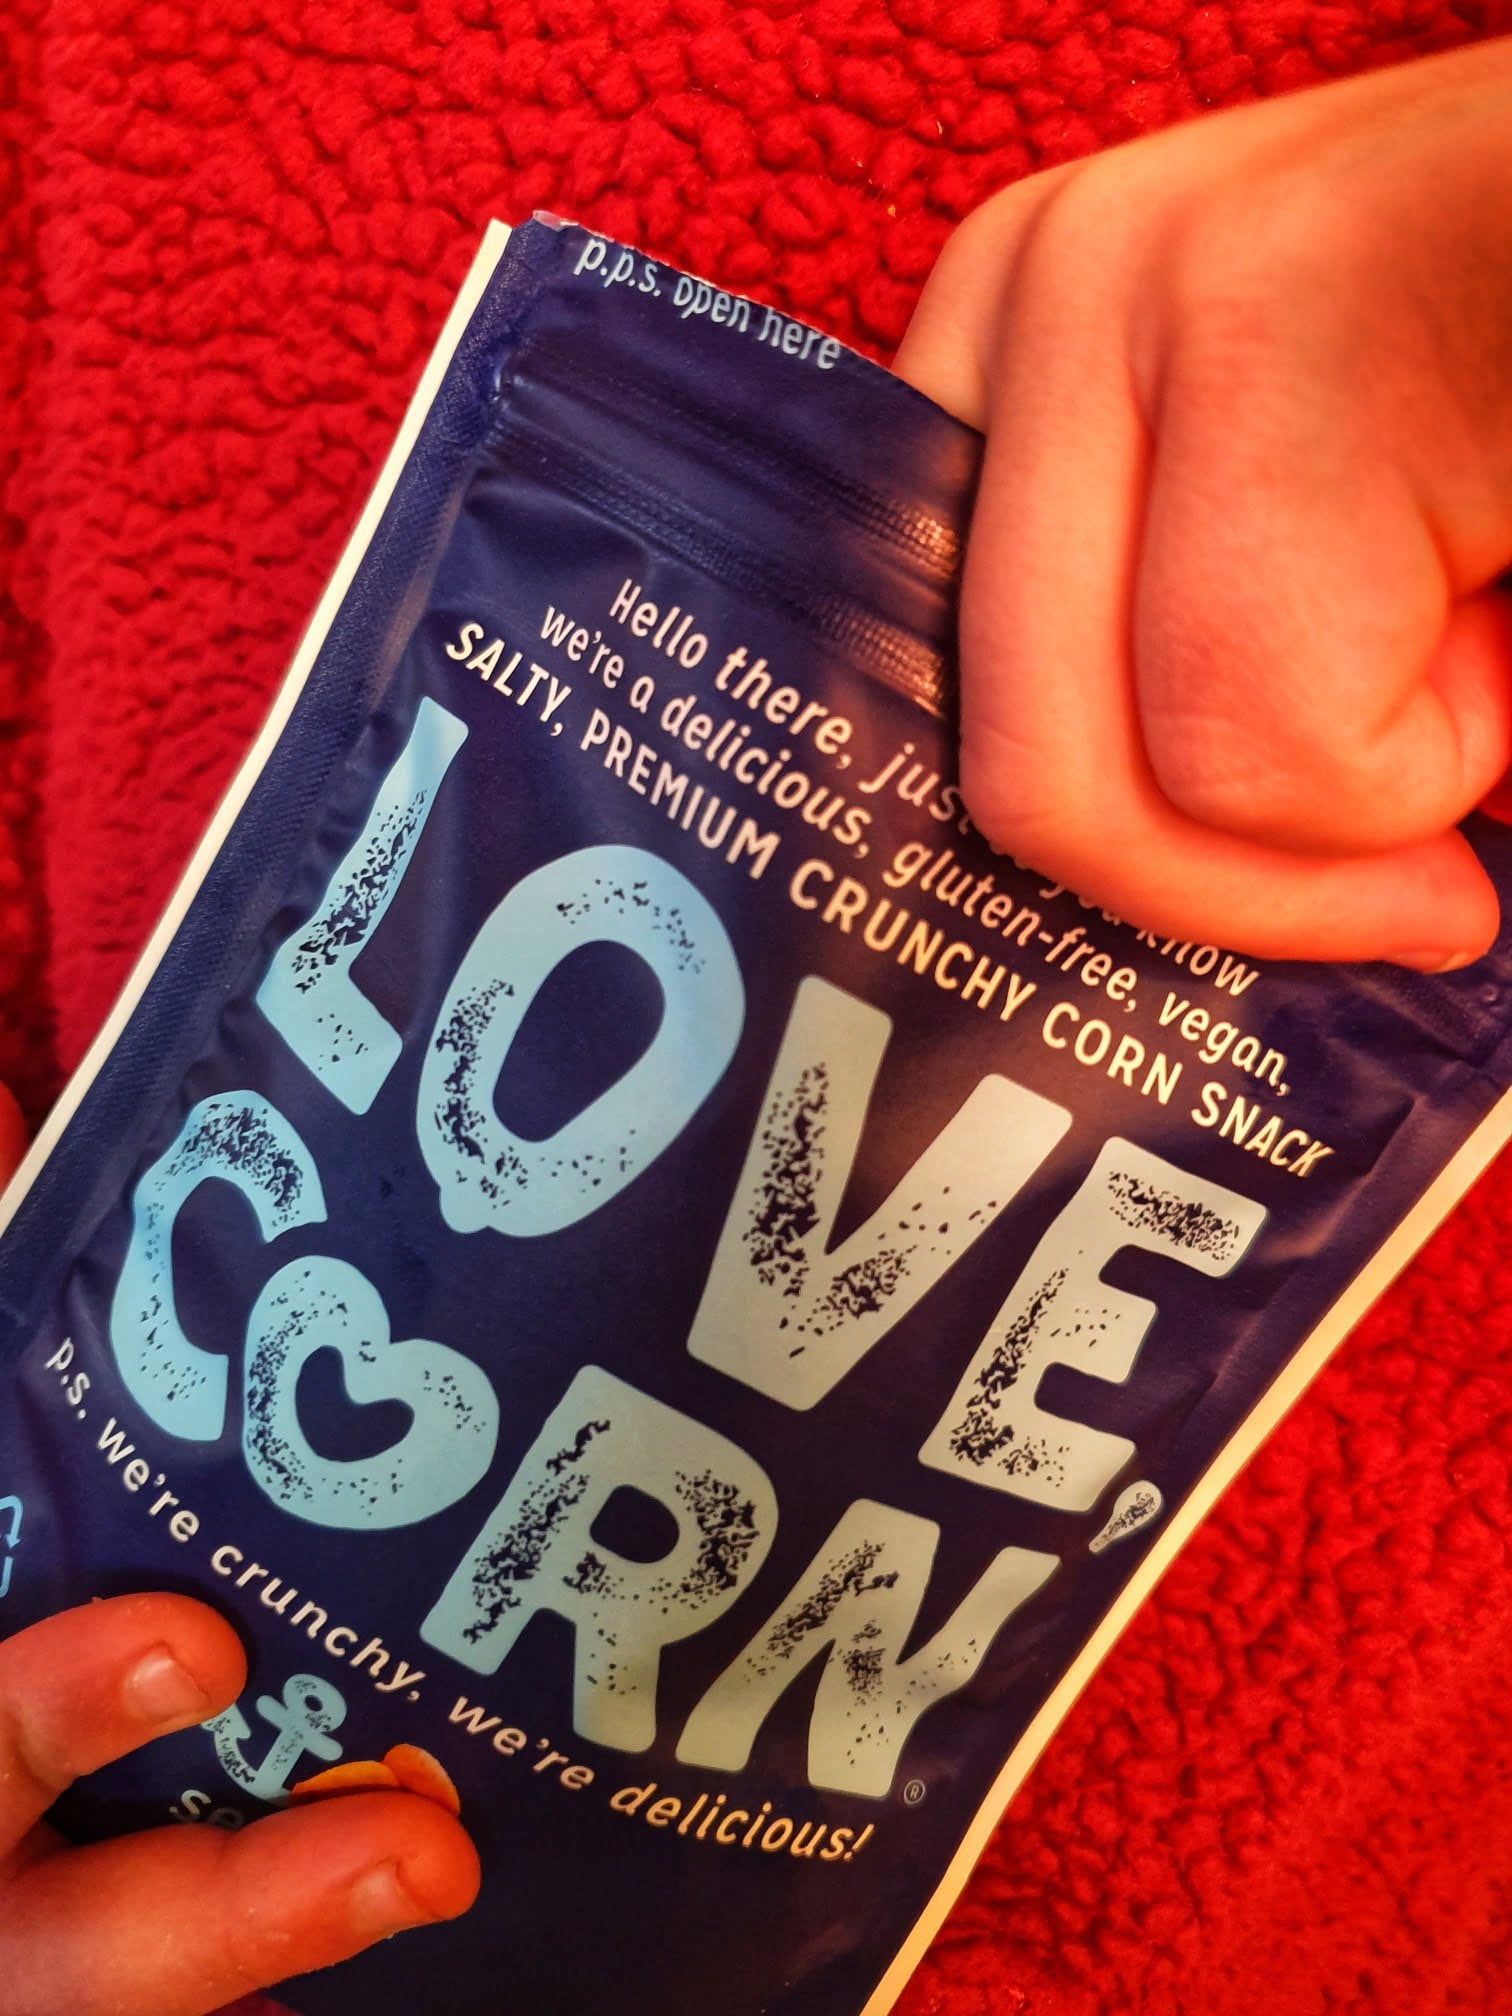 LOVE CORN | Salt & Vinegar Delicious Crunchy Corn | 1.6oz, 10 bags |  Low-Sugar, Gluten-Free, Plant Based, Non-GMO